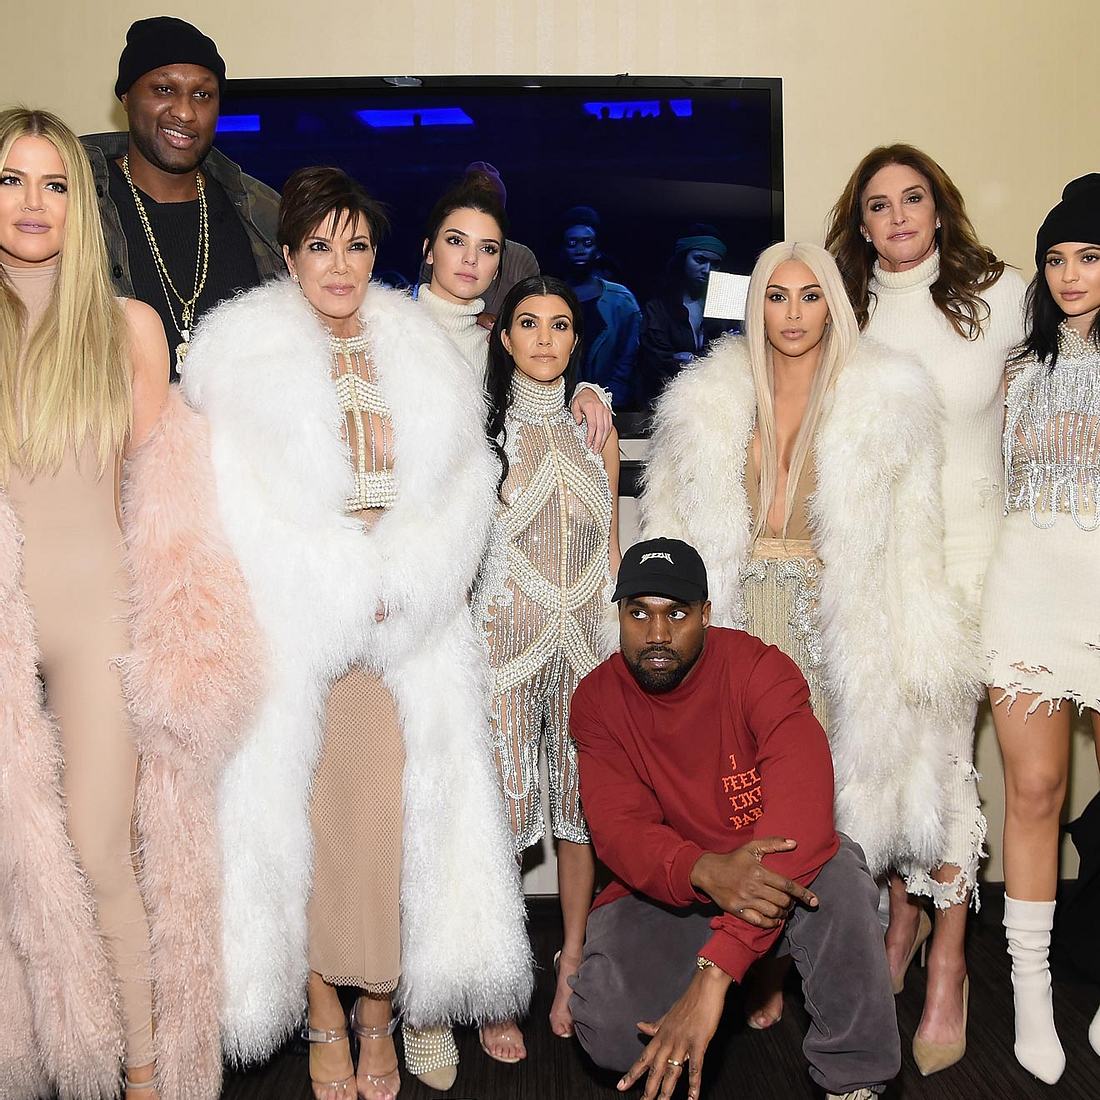 Der Kardashian-Jenner-Clan wurde durch die Reality-TV Serie Keeping up with the Kardashians berühmt